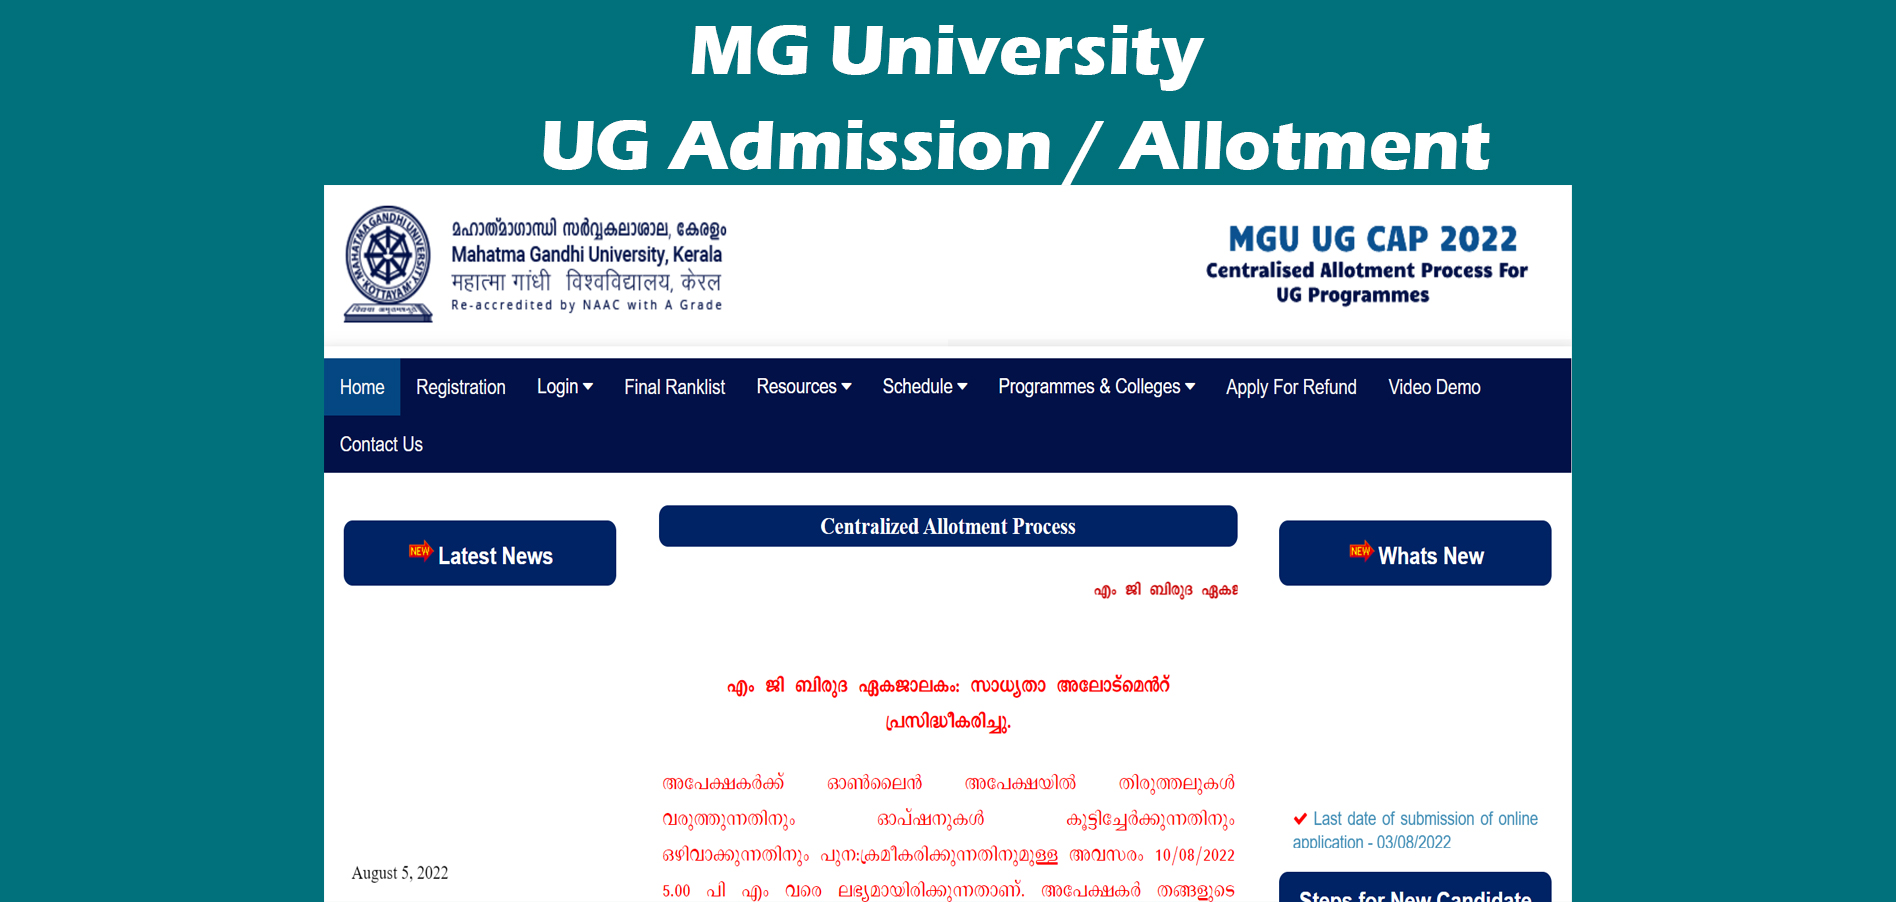 MG University UG Admission / Allotment